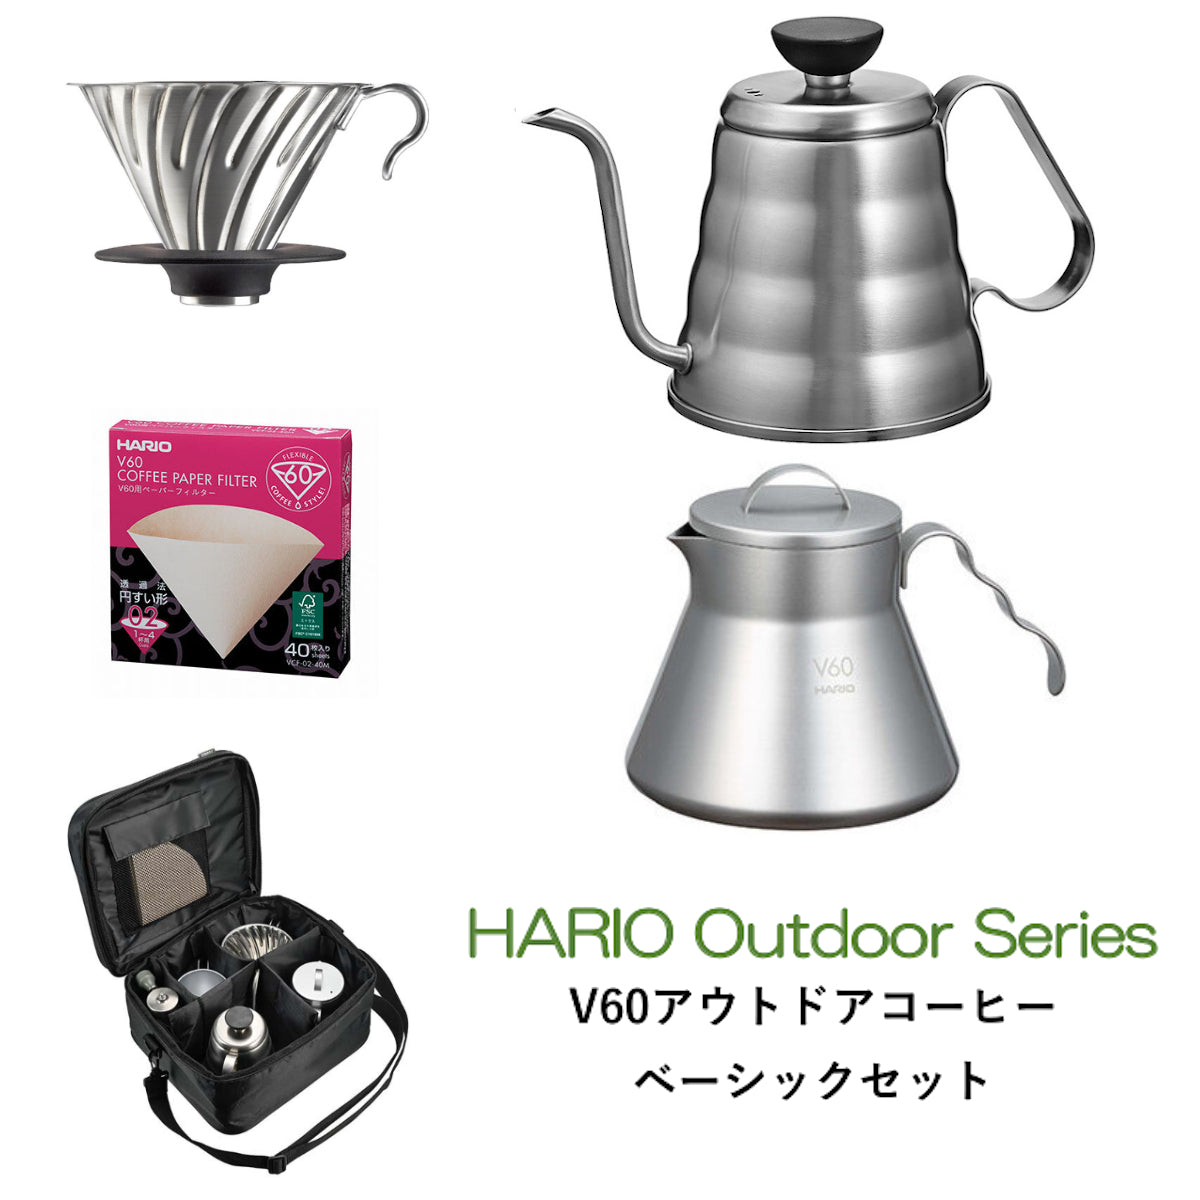 HARIO】 V60アウトドアコーヒーベーシックセット HARIO Outdoor Series 